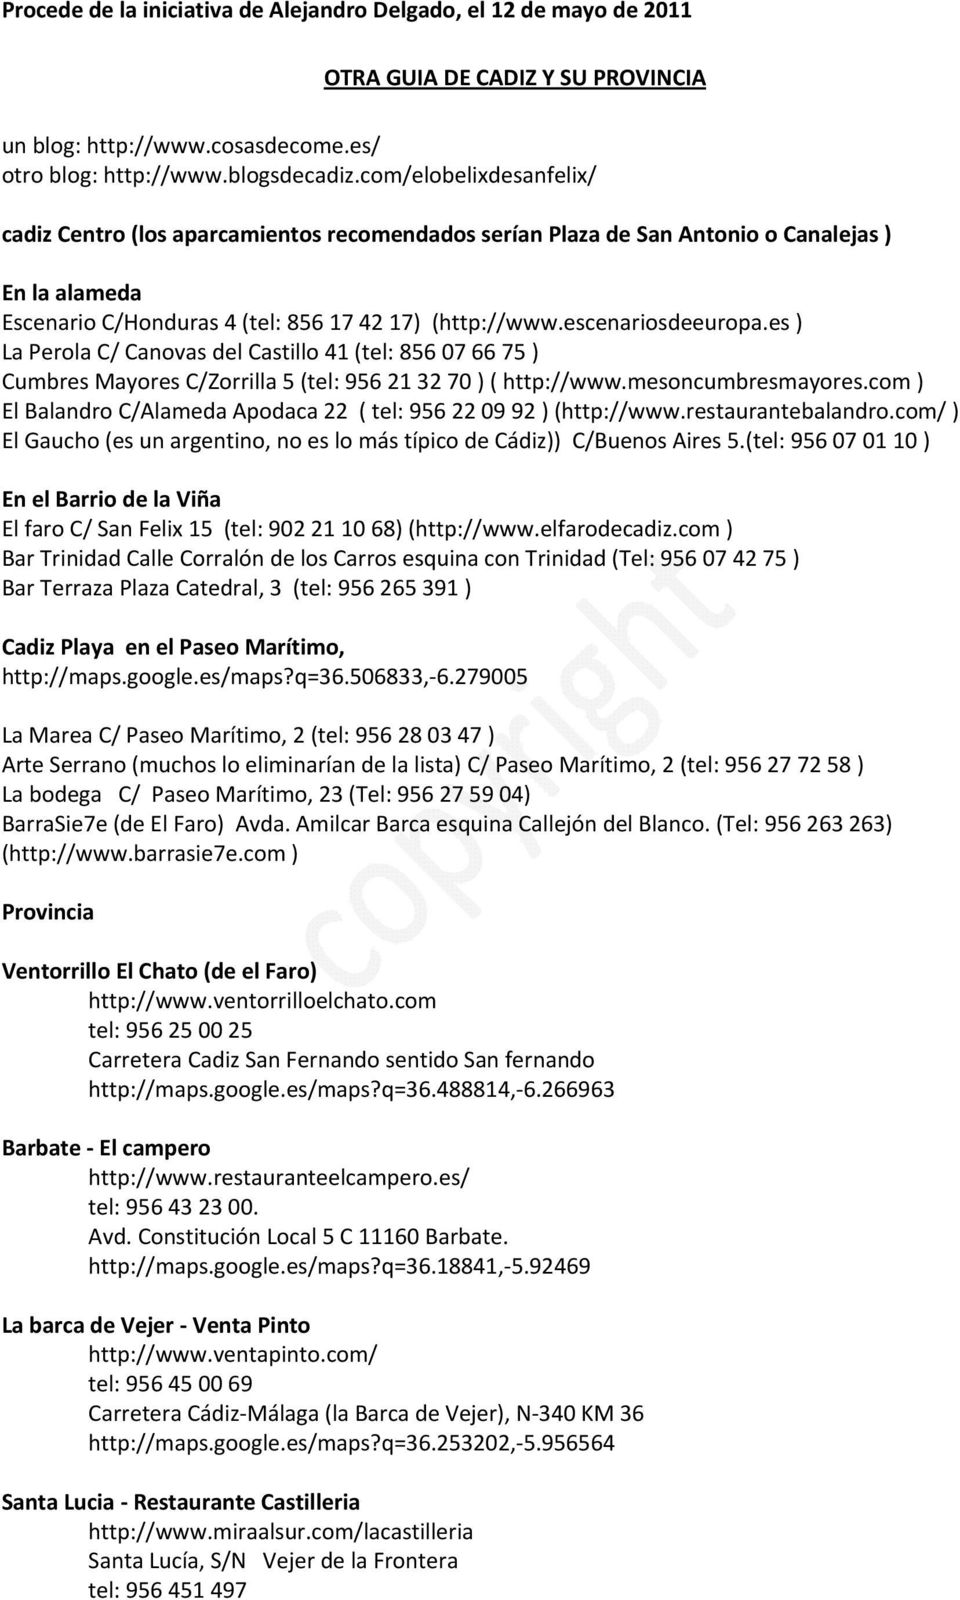 es ) La Perola C/ Canovas del Castillo 41 (tel: 856 07 66 75 ) Cumbres Mayores C/Zorrilla 5 (tel: 956 21 32 70 ) ( http://www.mesoncumbresmayores.